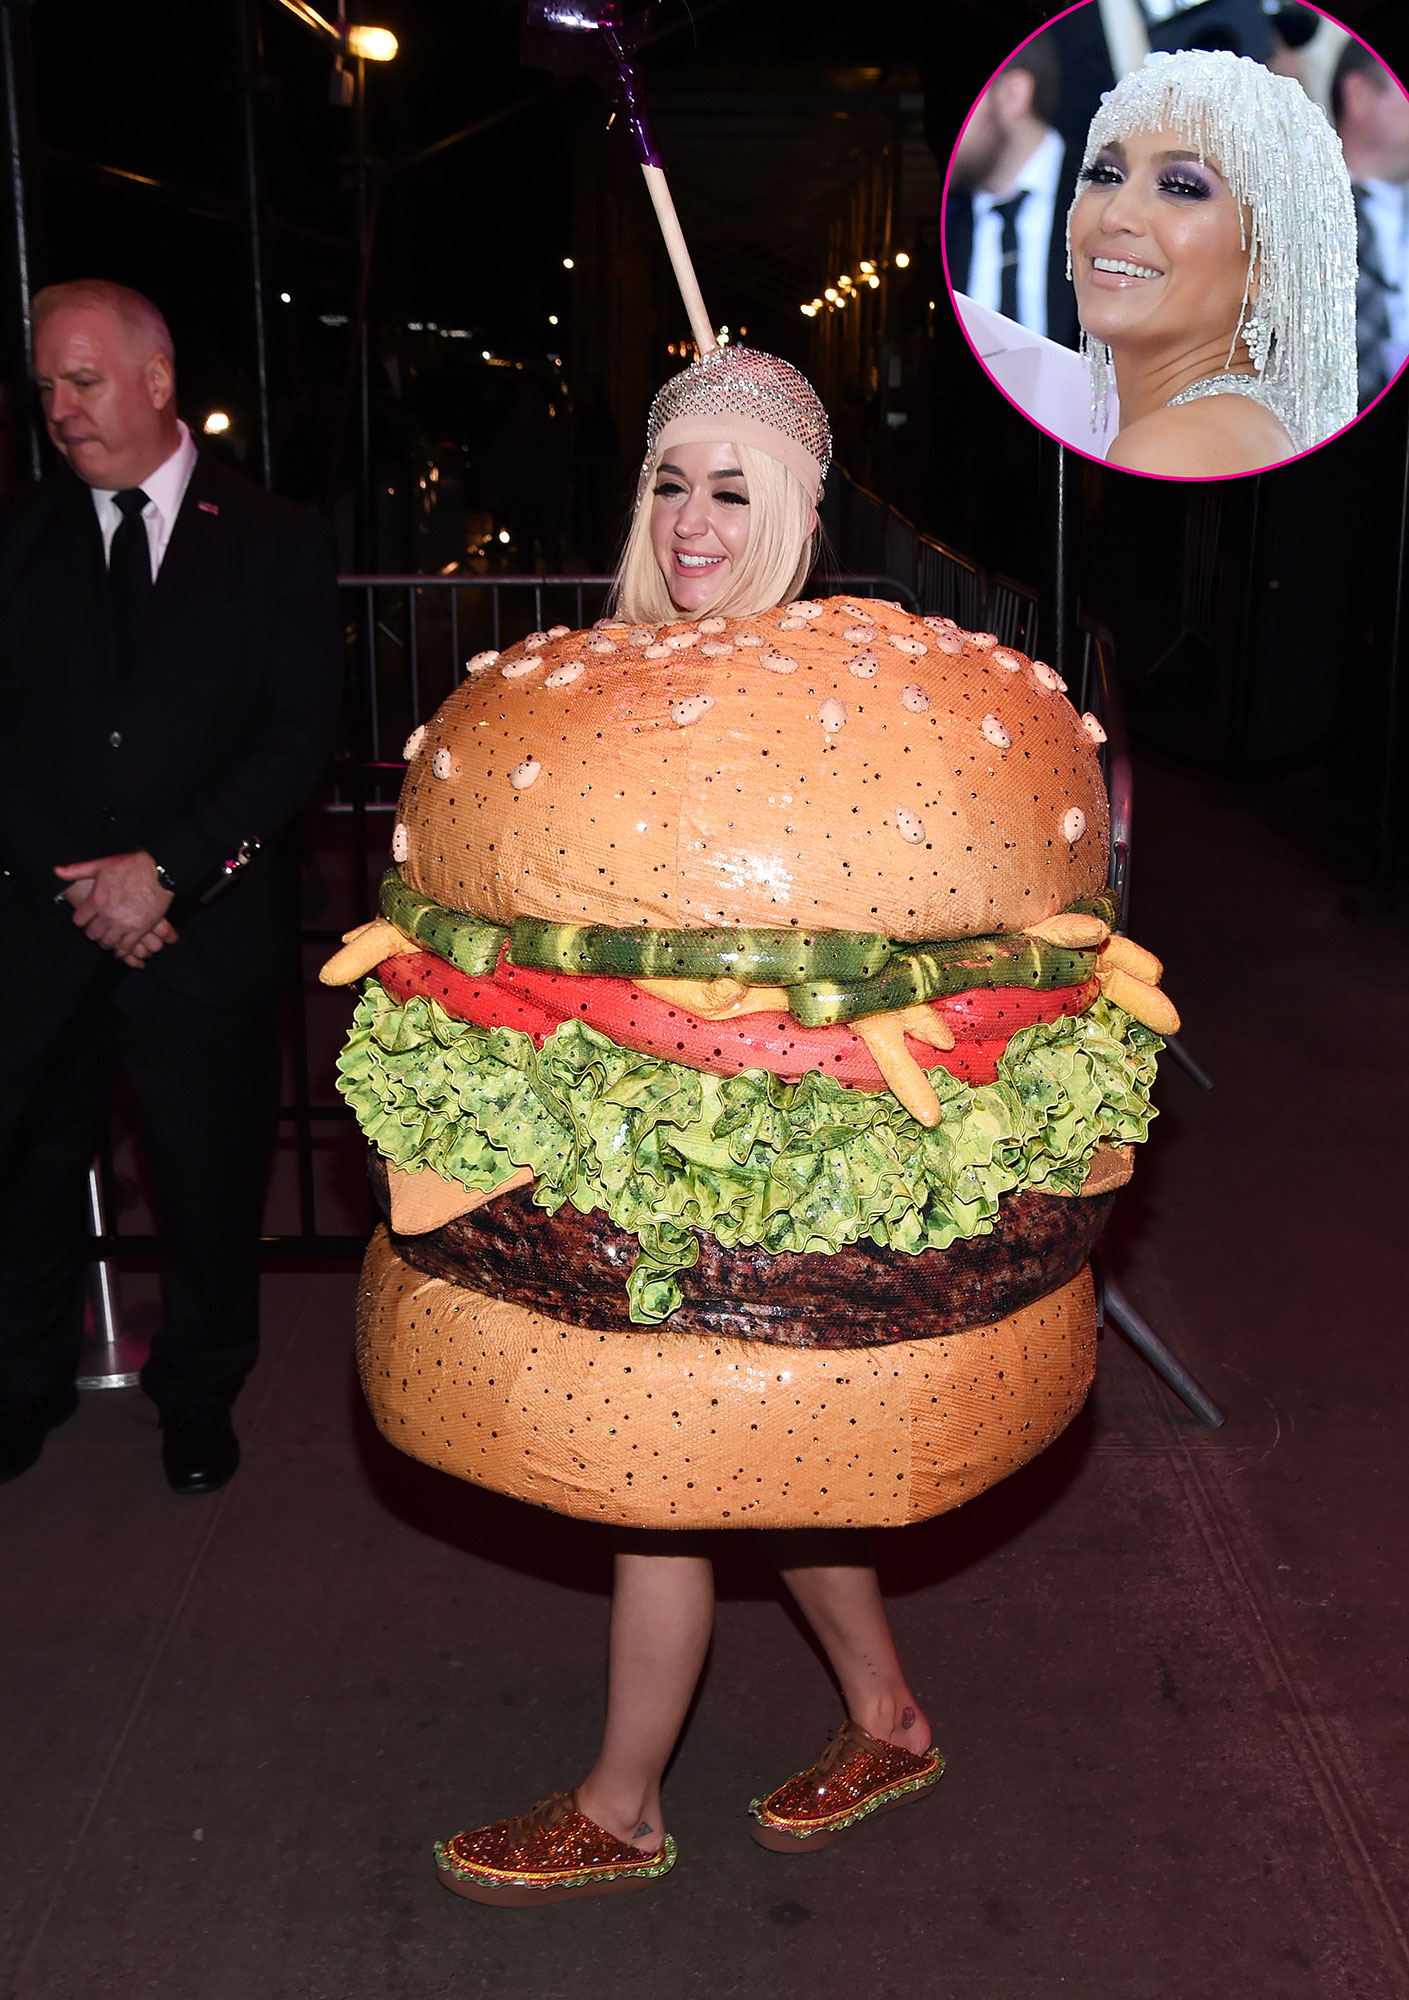 Met Gala 2019: Jennifer Lopez Is Unfazed by Katy Perry's Burger Costume